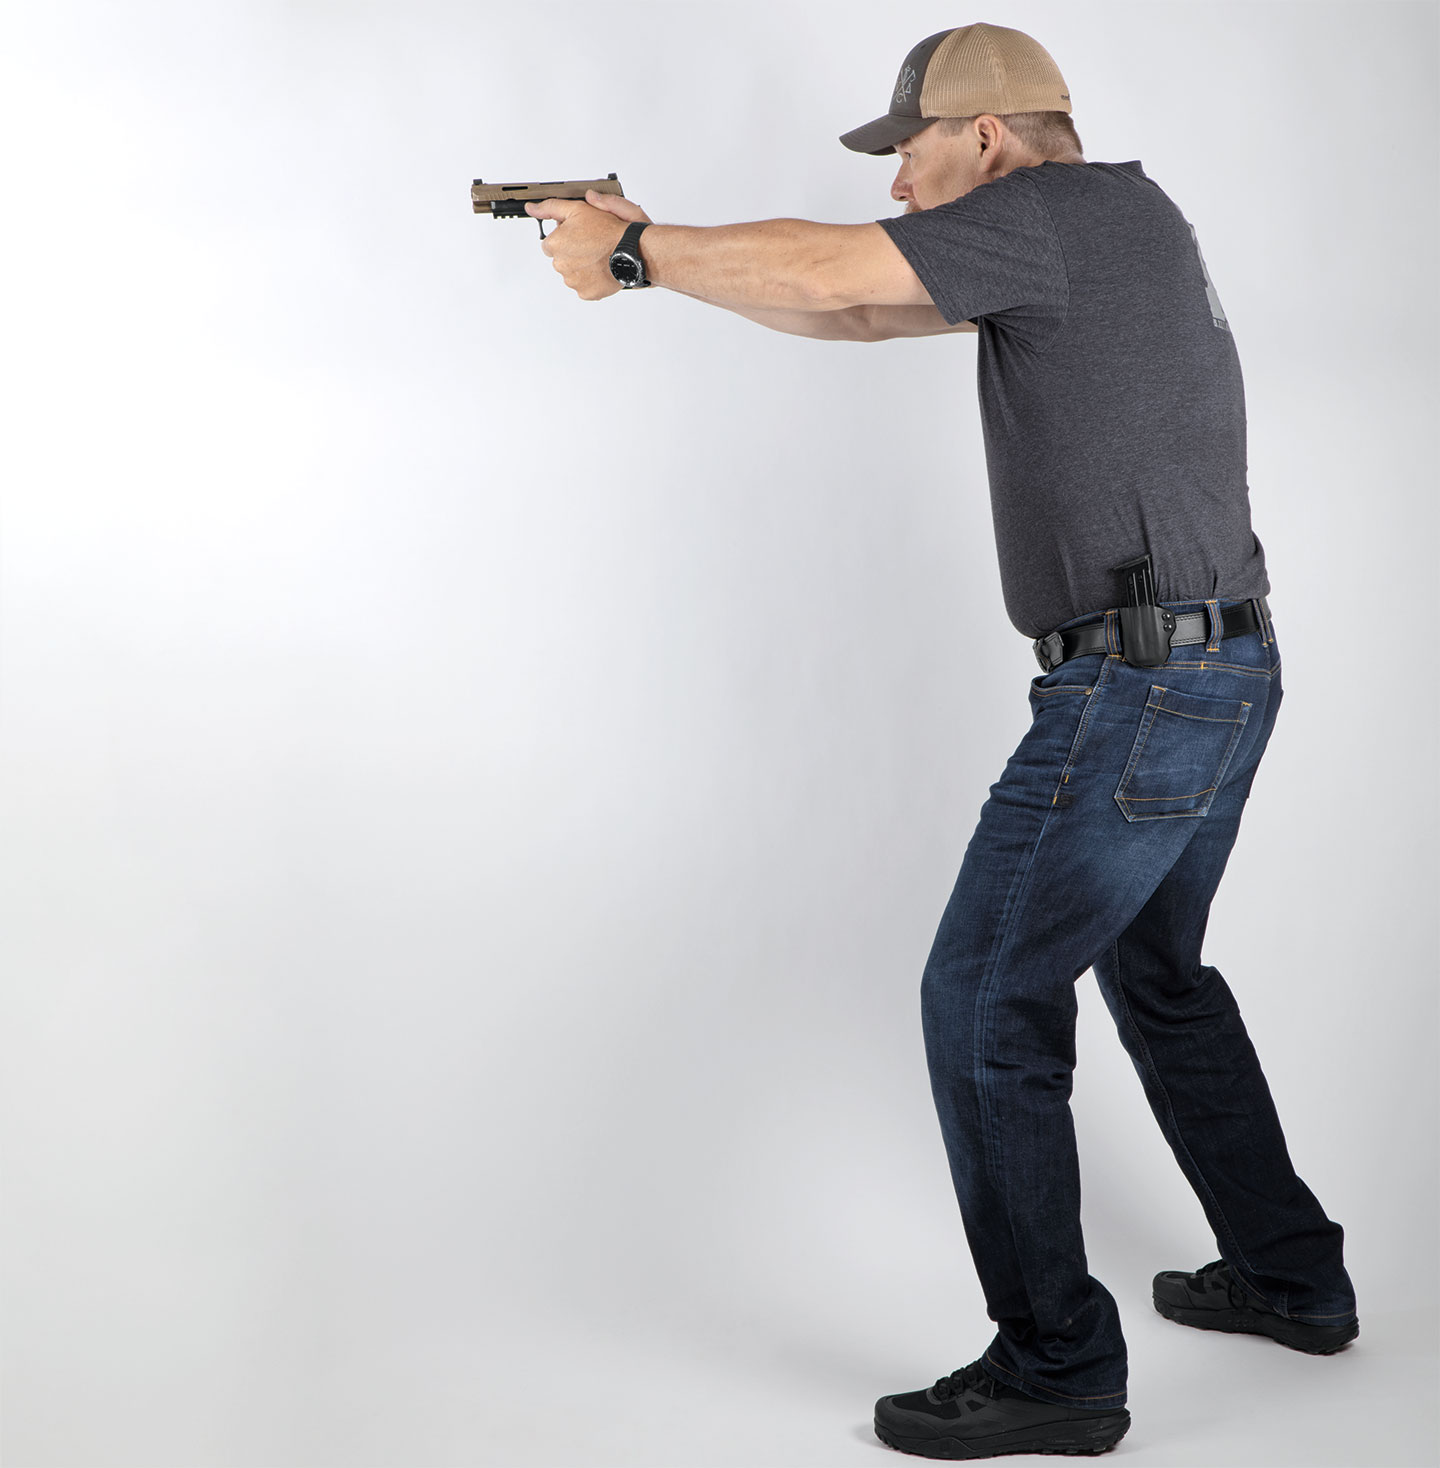 Five-Common-Pistol-Shooting-Errors-4